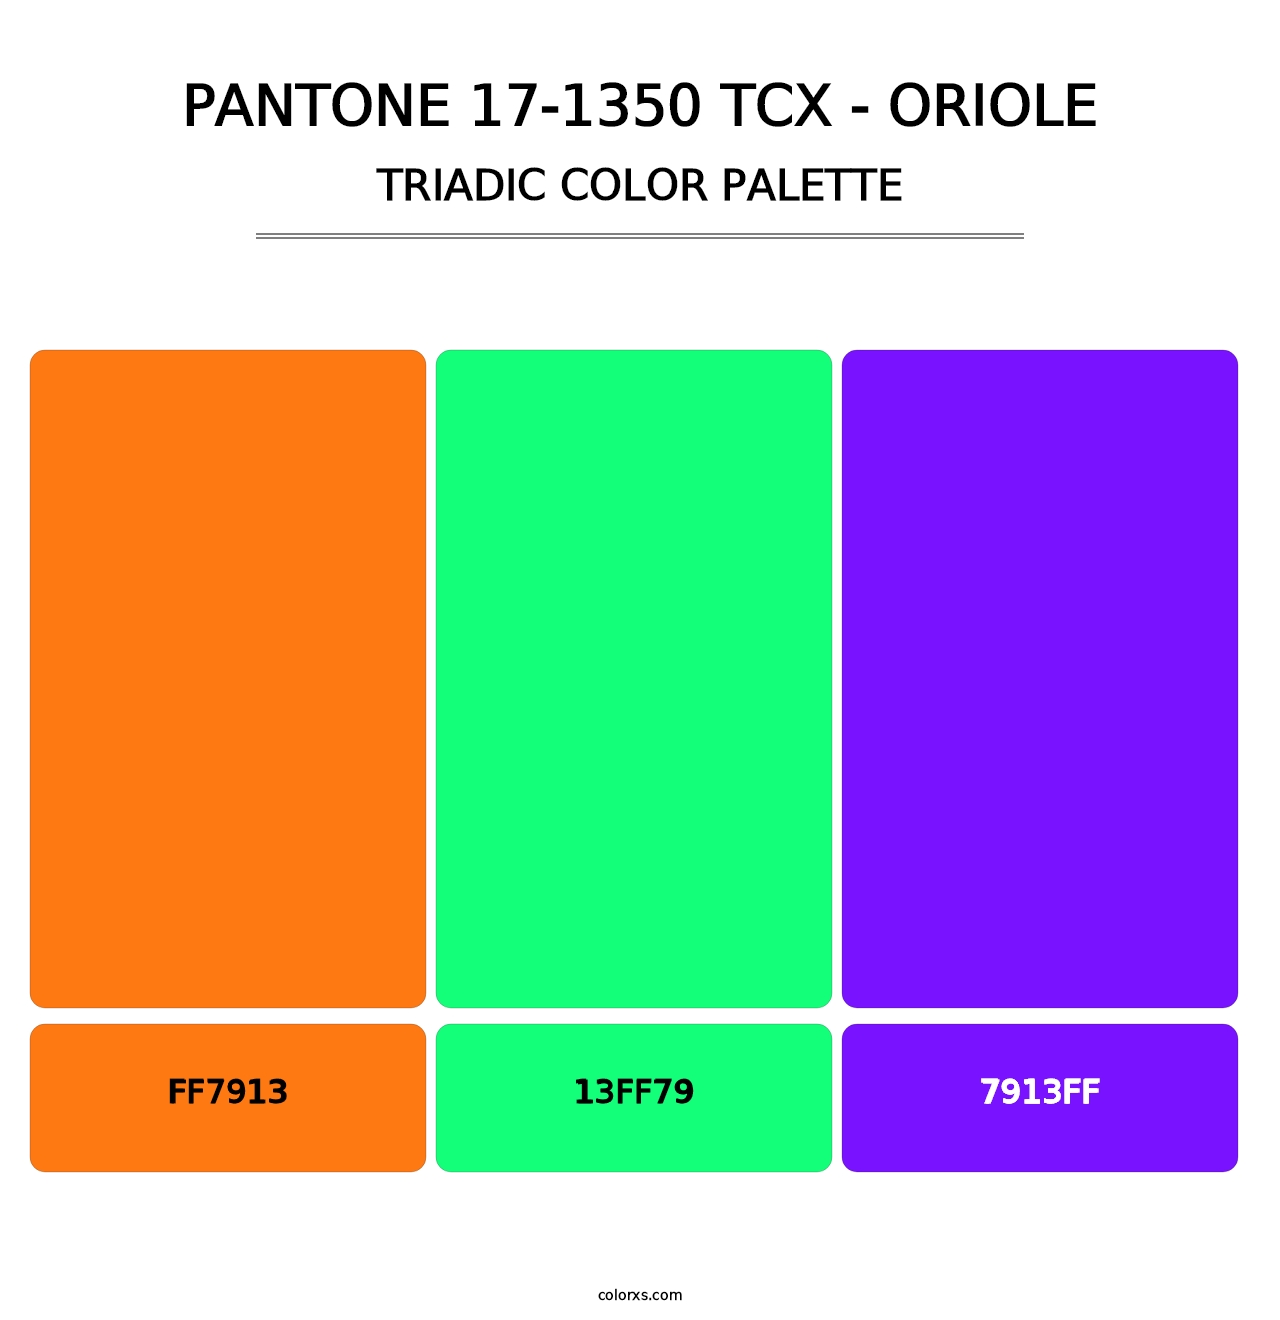 PANTONE 17-1350 TCX - Oriole - Triadic Color Palette